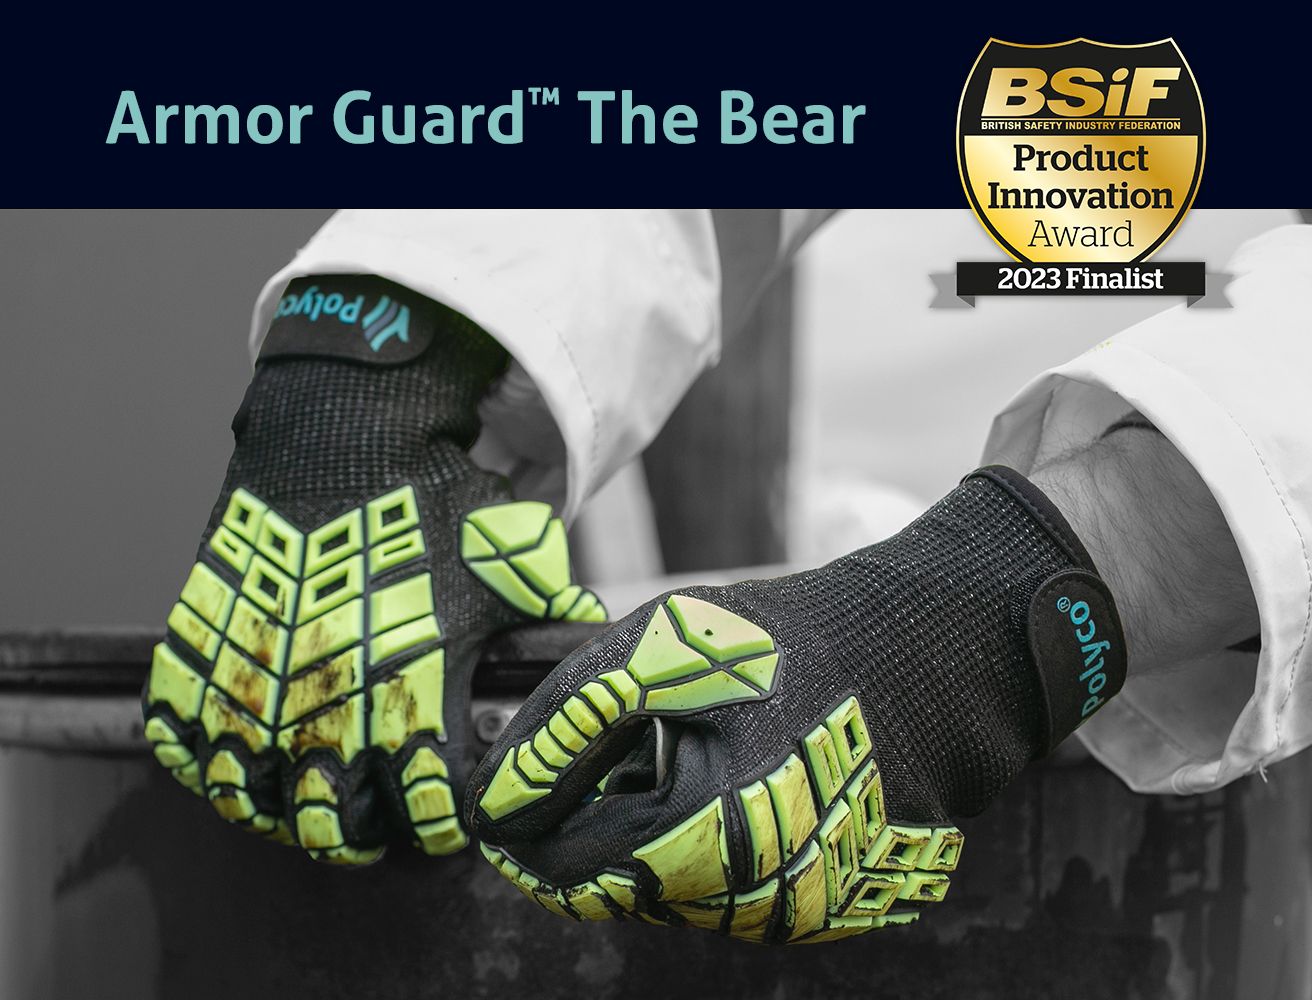 Armor Guard THE BEAR, BSIF Product Innovation Award Finalist